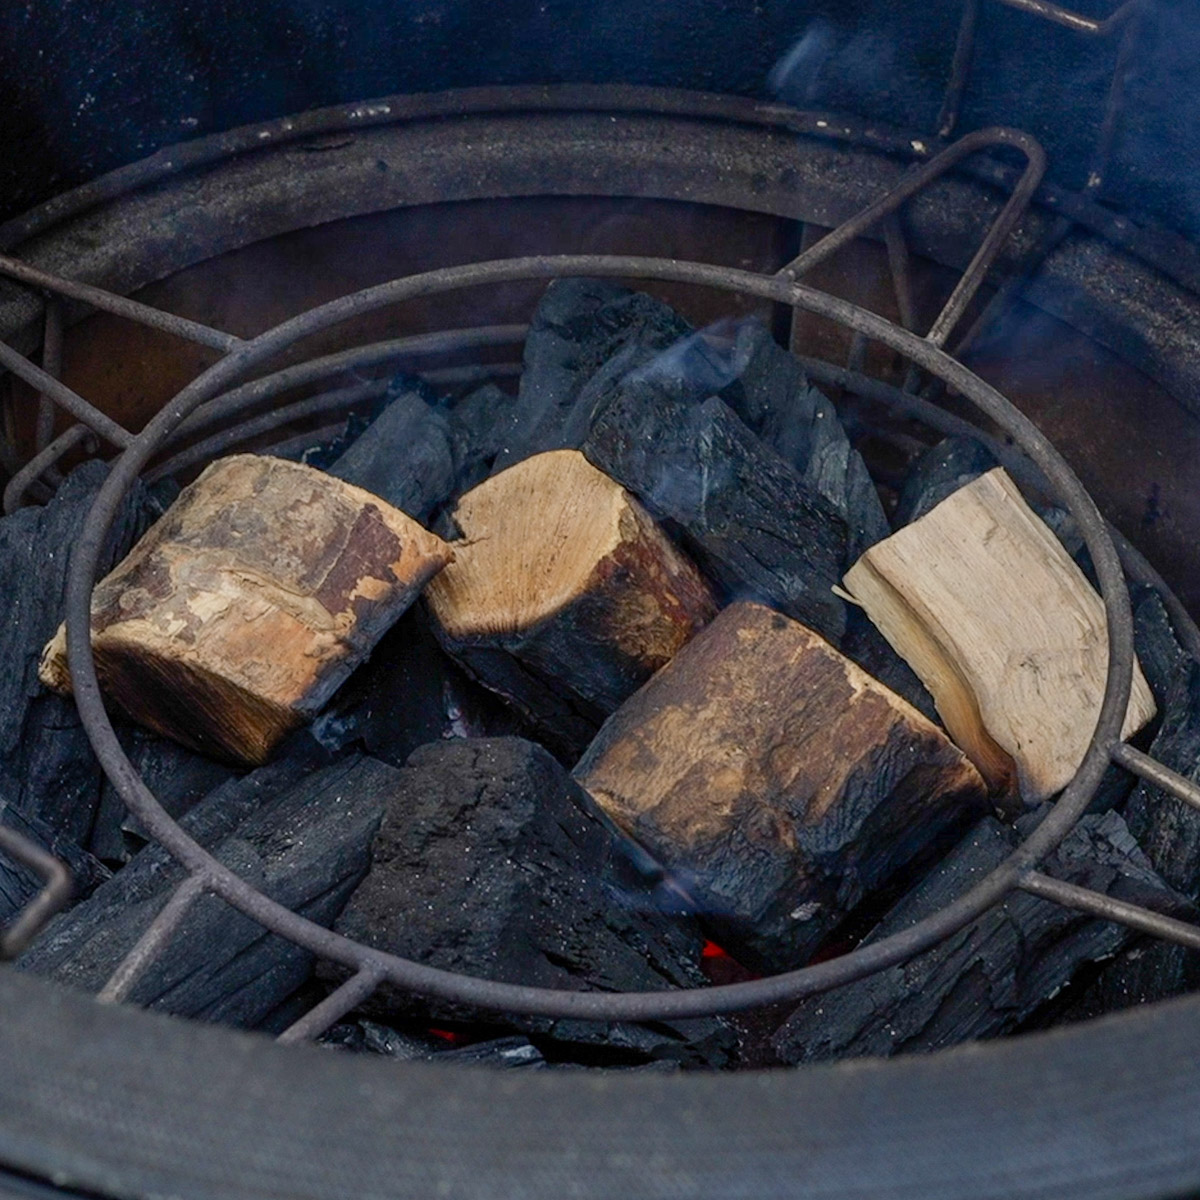 Add wood chunks to lit charcoal.